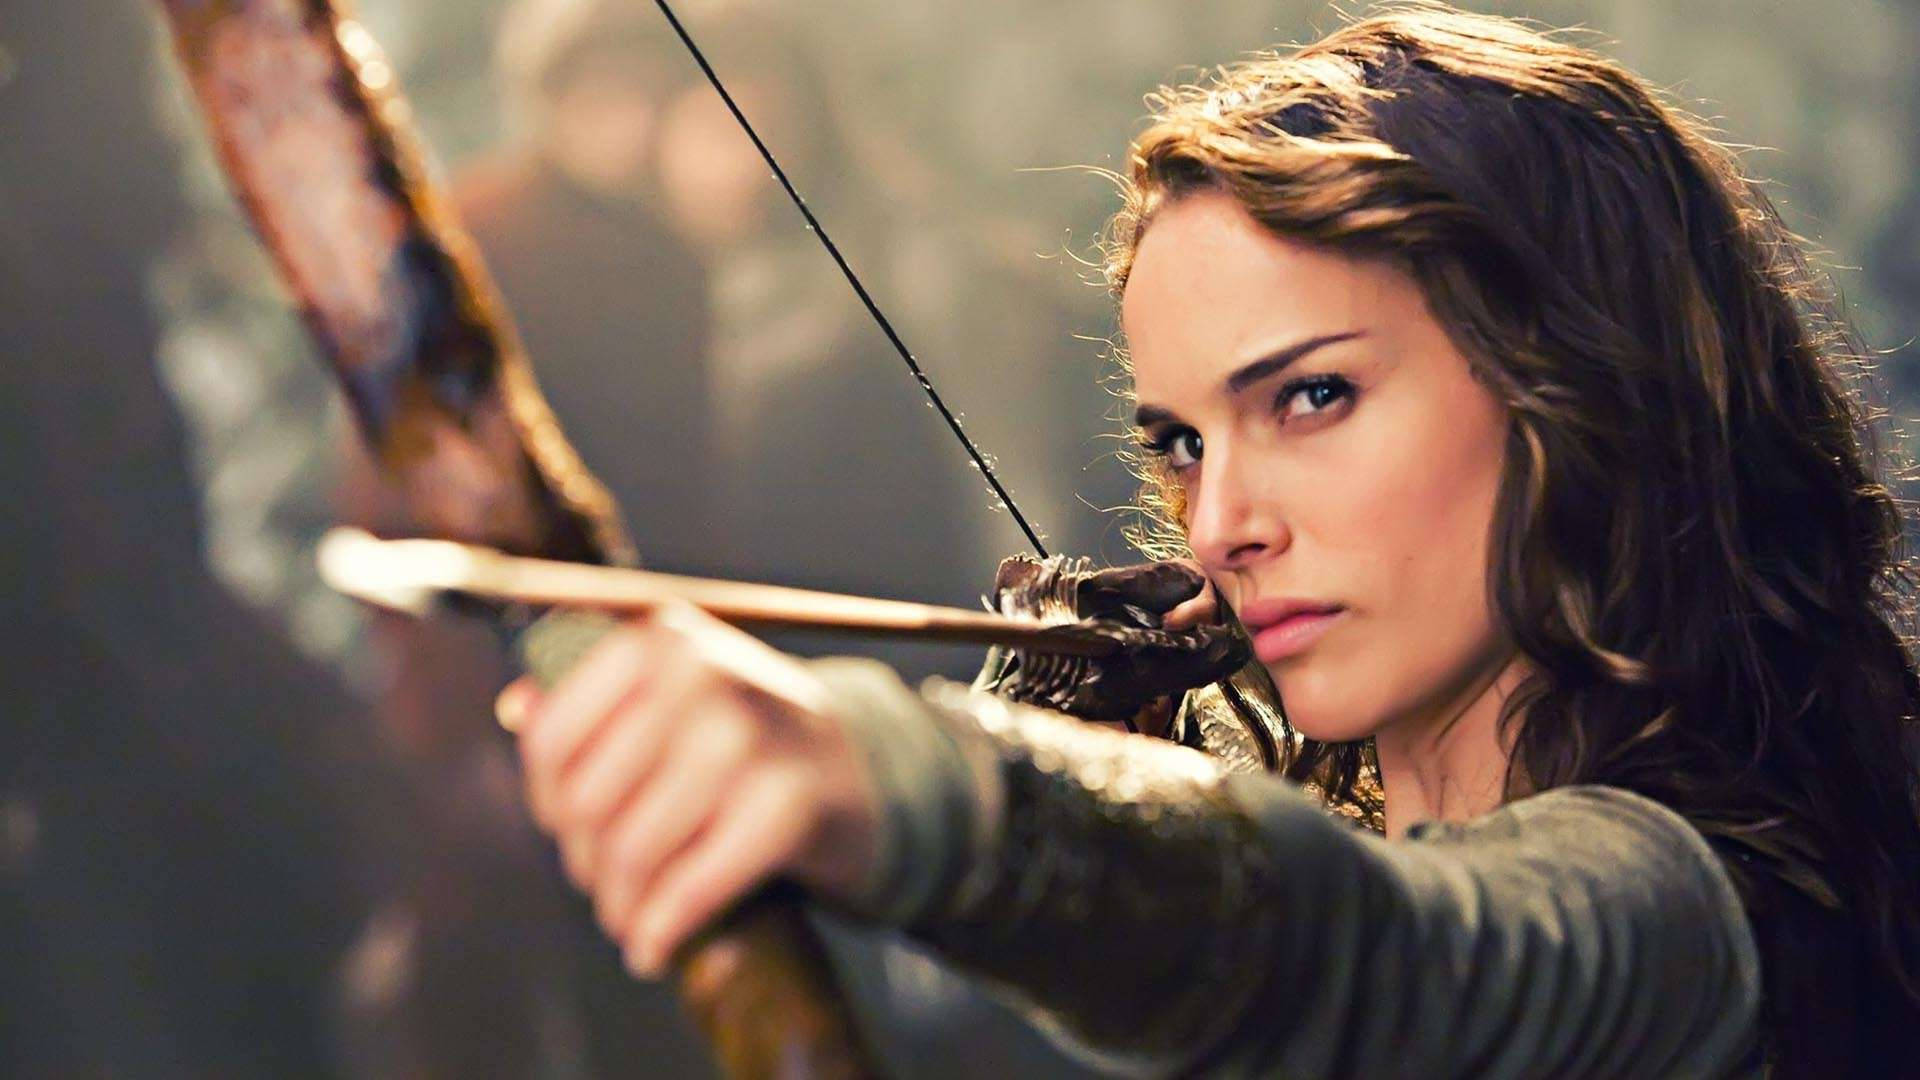 Natalie Portman With Bow And Arrow